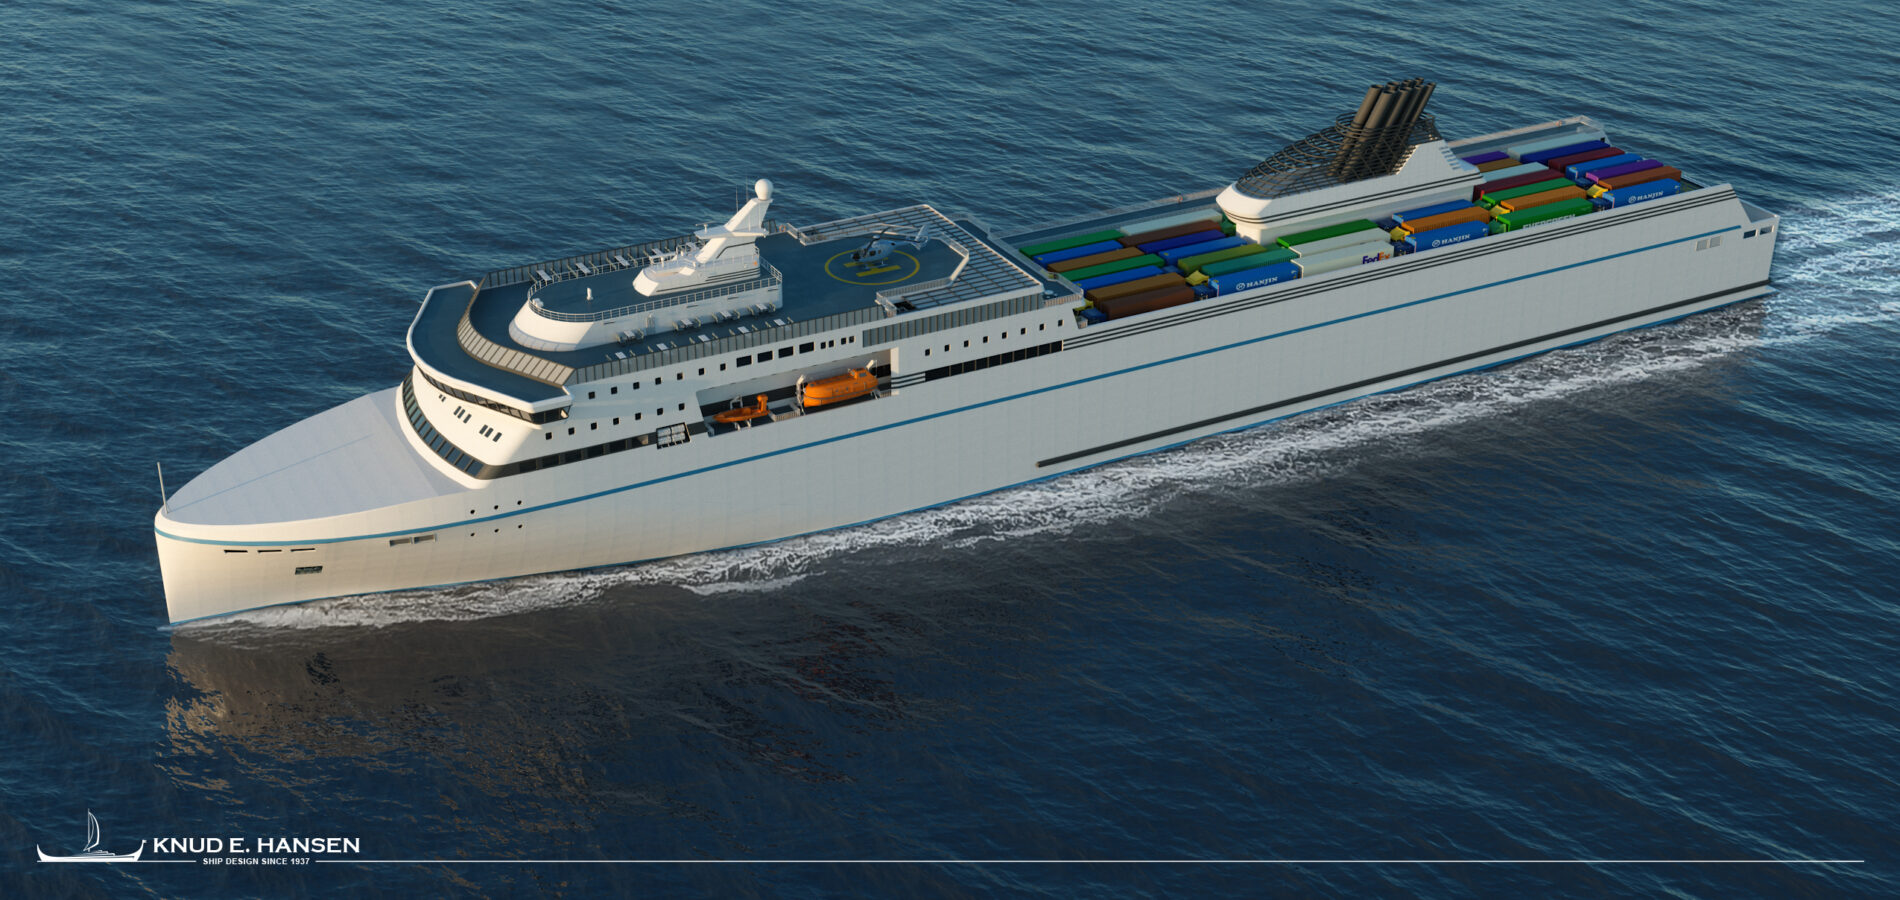 212-m-ropax-ferry-designed-by-KNUDEHANSEN-1900x900.jpg